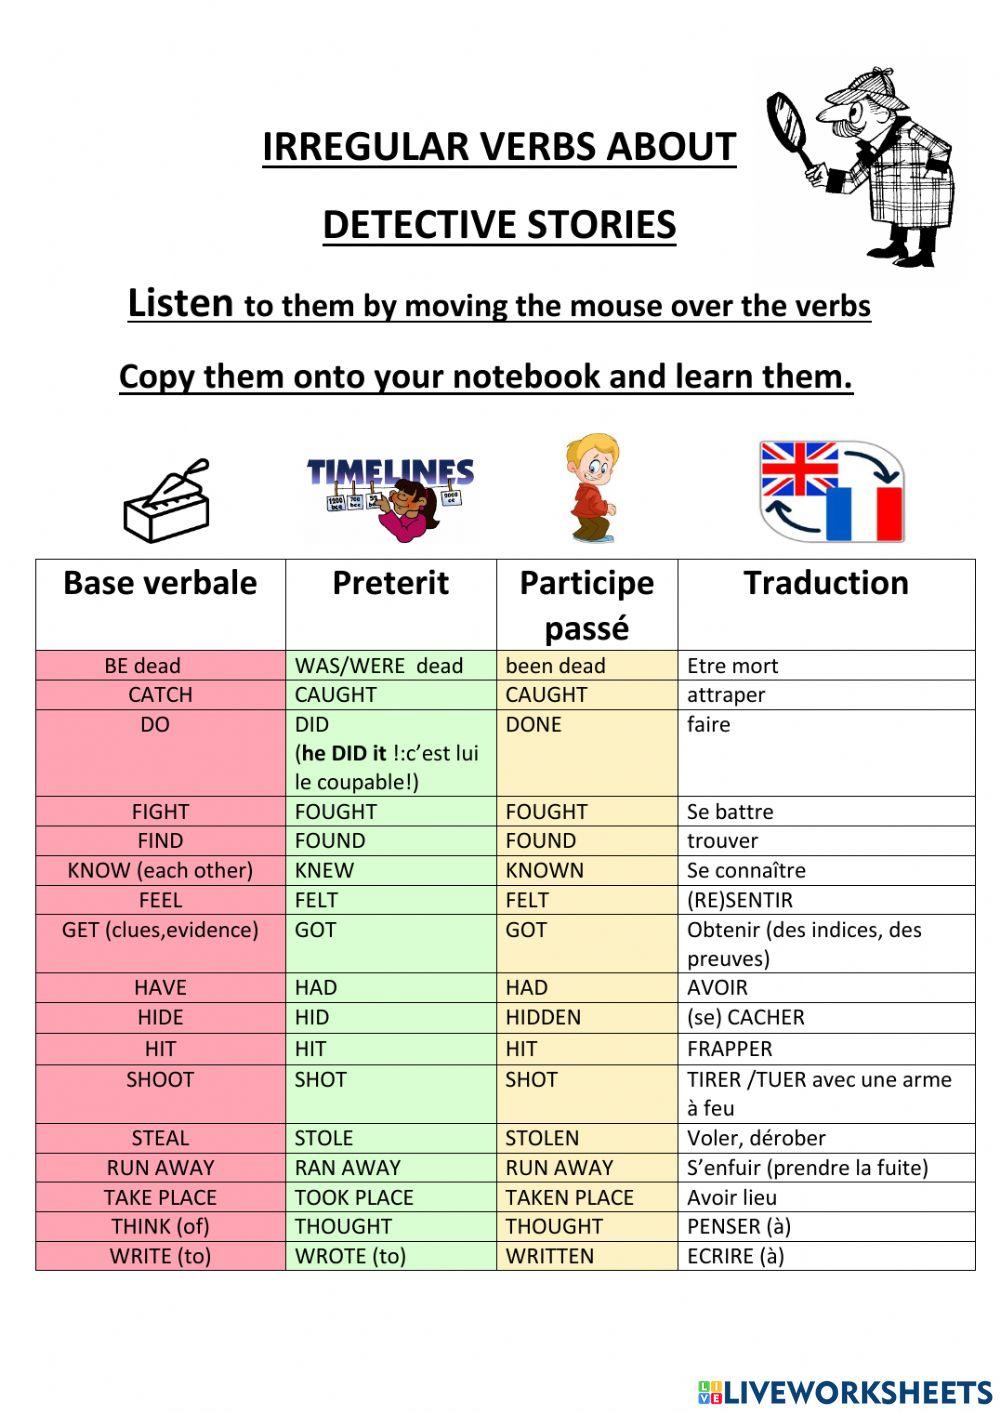 Irregular verbs on detective stories